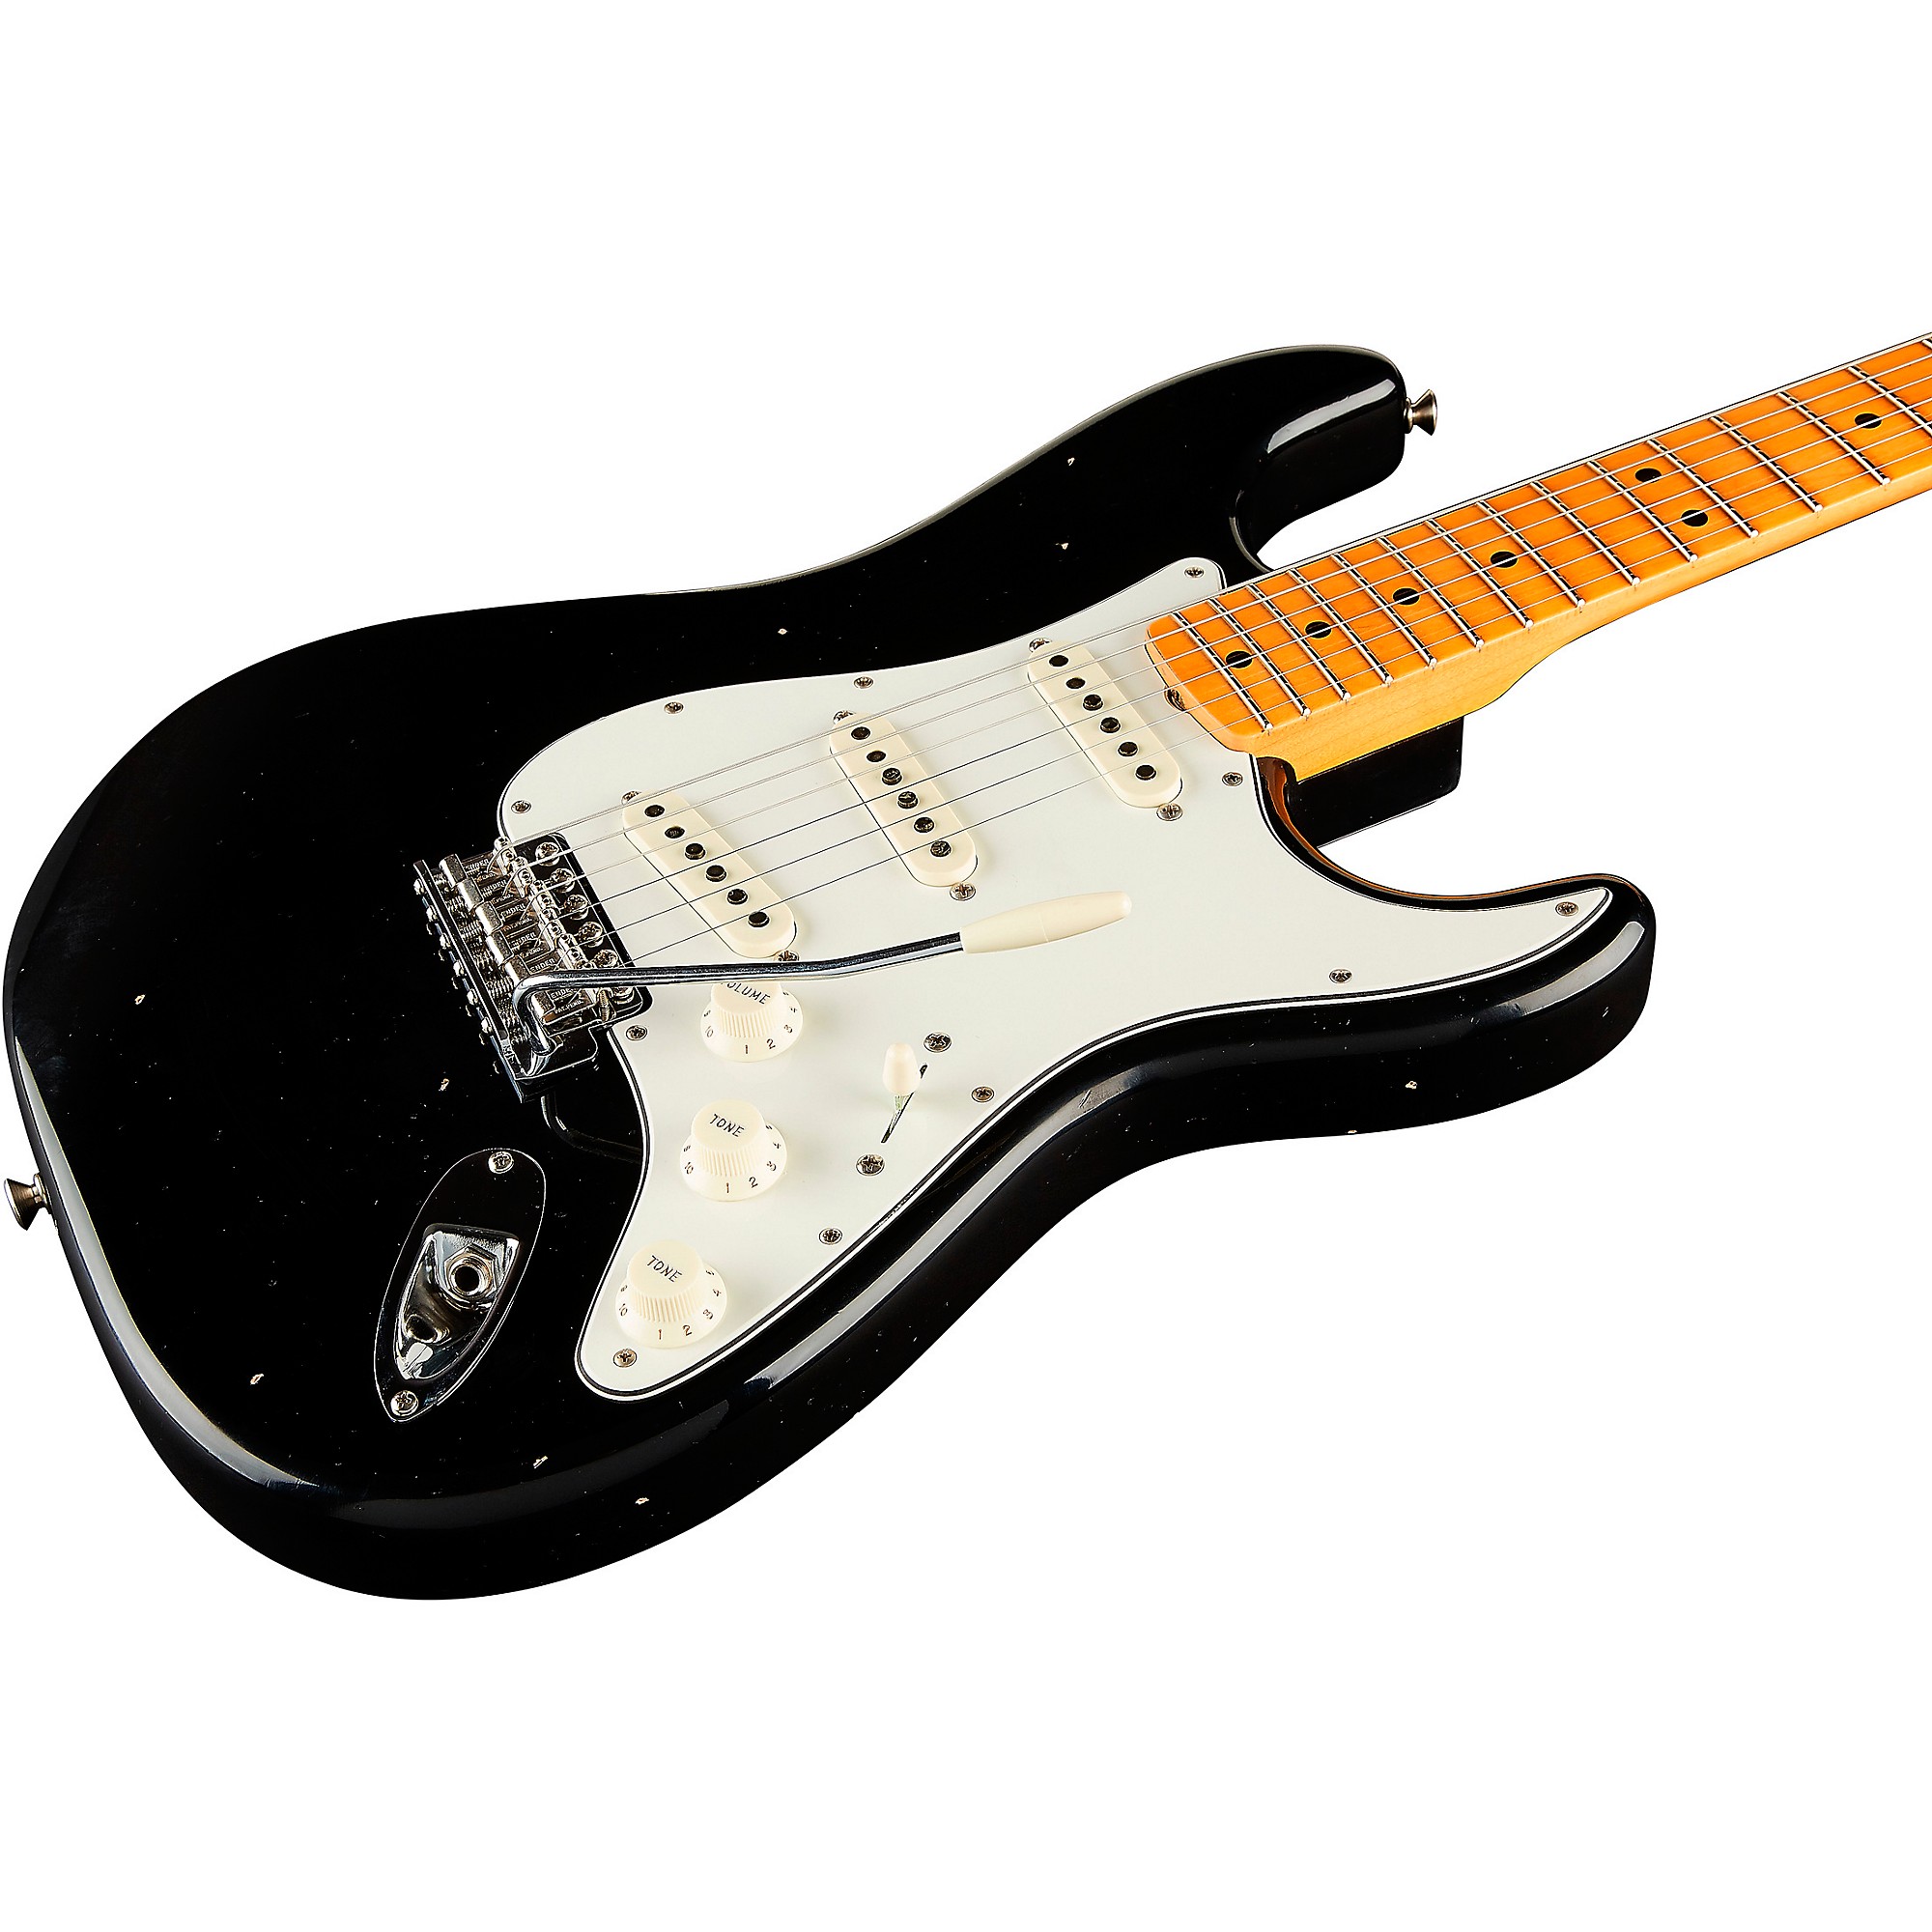 Platinum　Stratocaster　Shop　Custom　Child　Fender　Voodoo　Guitar　Jimi　Relic　Black　Electric　Hendrix　Guitar　Journeyman　Center